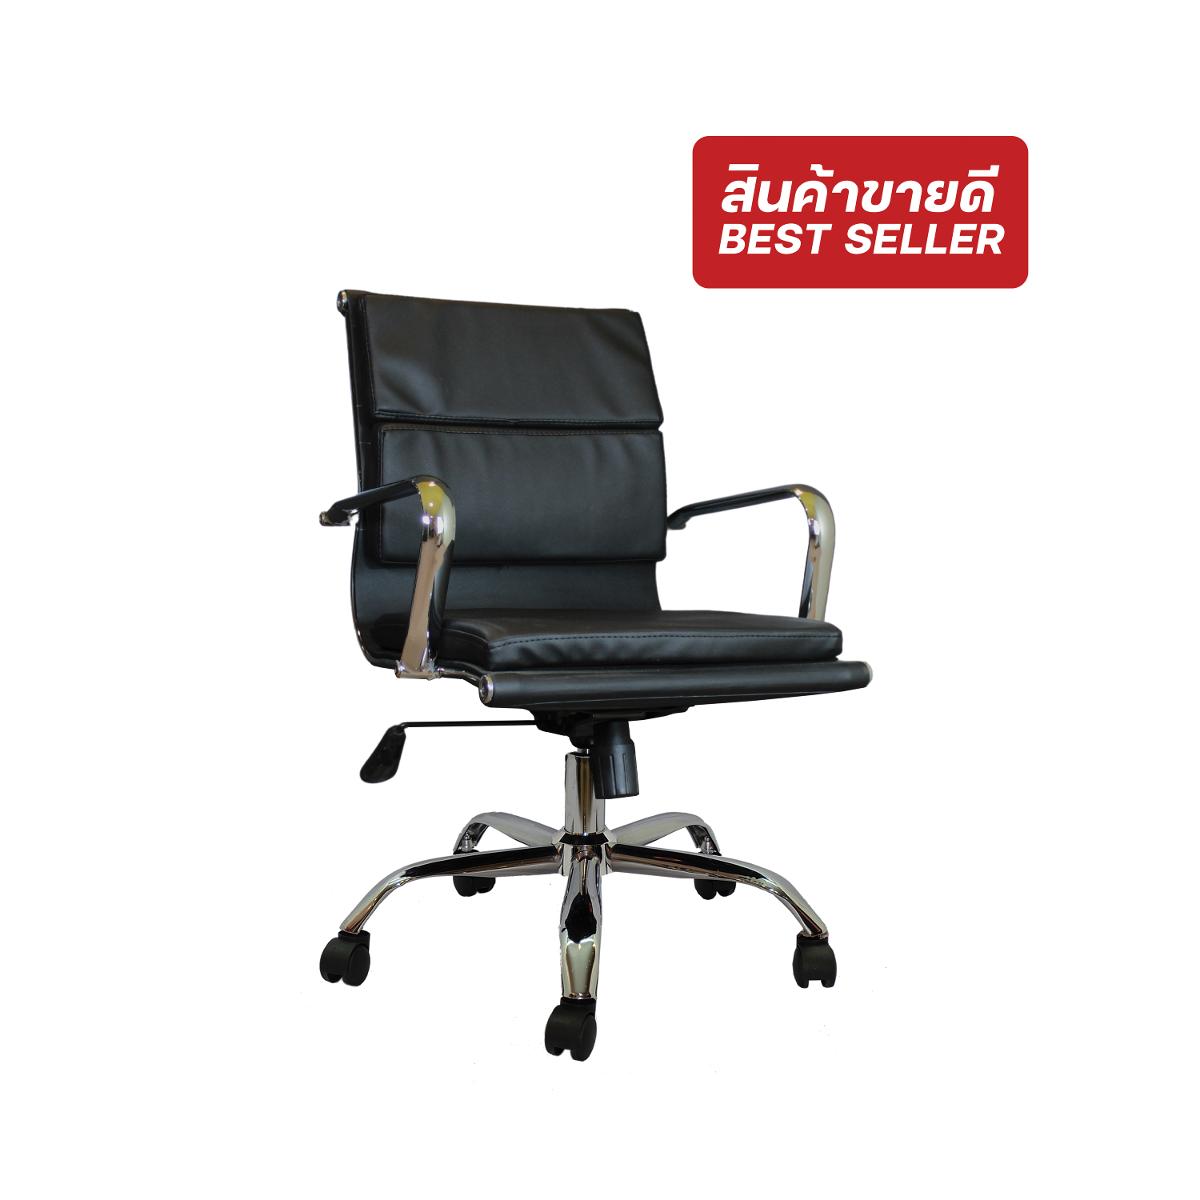 Super Chair เก้าอี้สำนักงาน รุ่น 531 Cushion - M